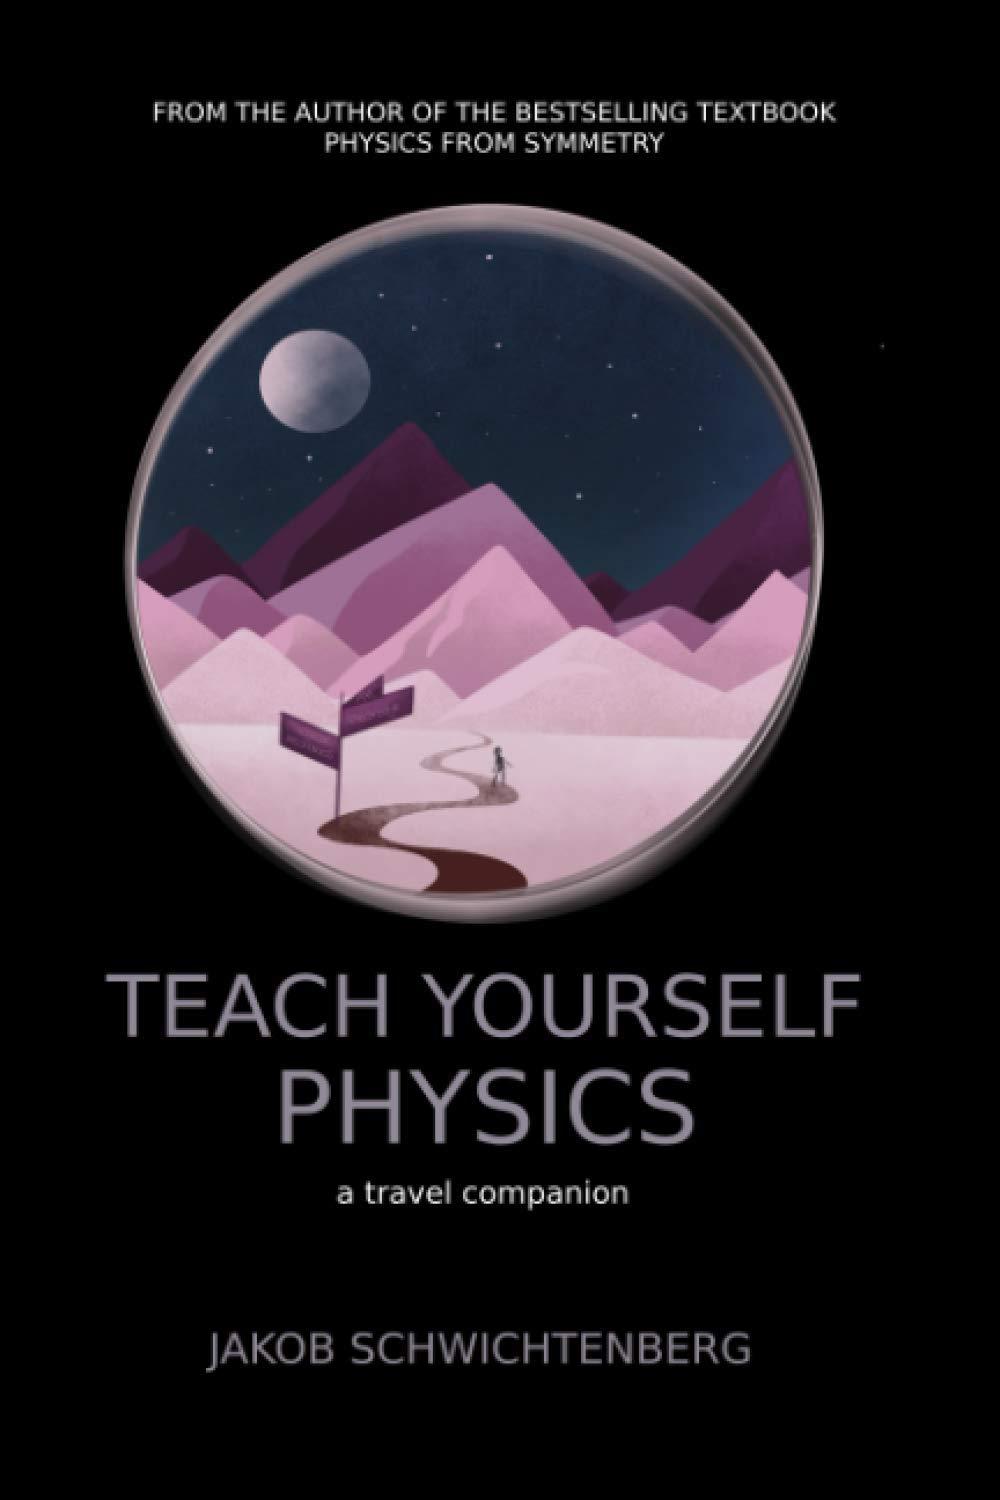 teach yourself physics a travel companion 1st edition jakob schwichtenberg 3948763003, 978-3948763008